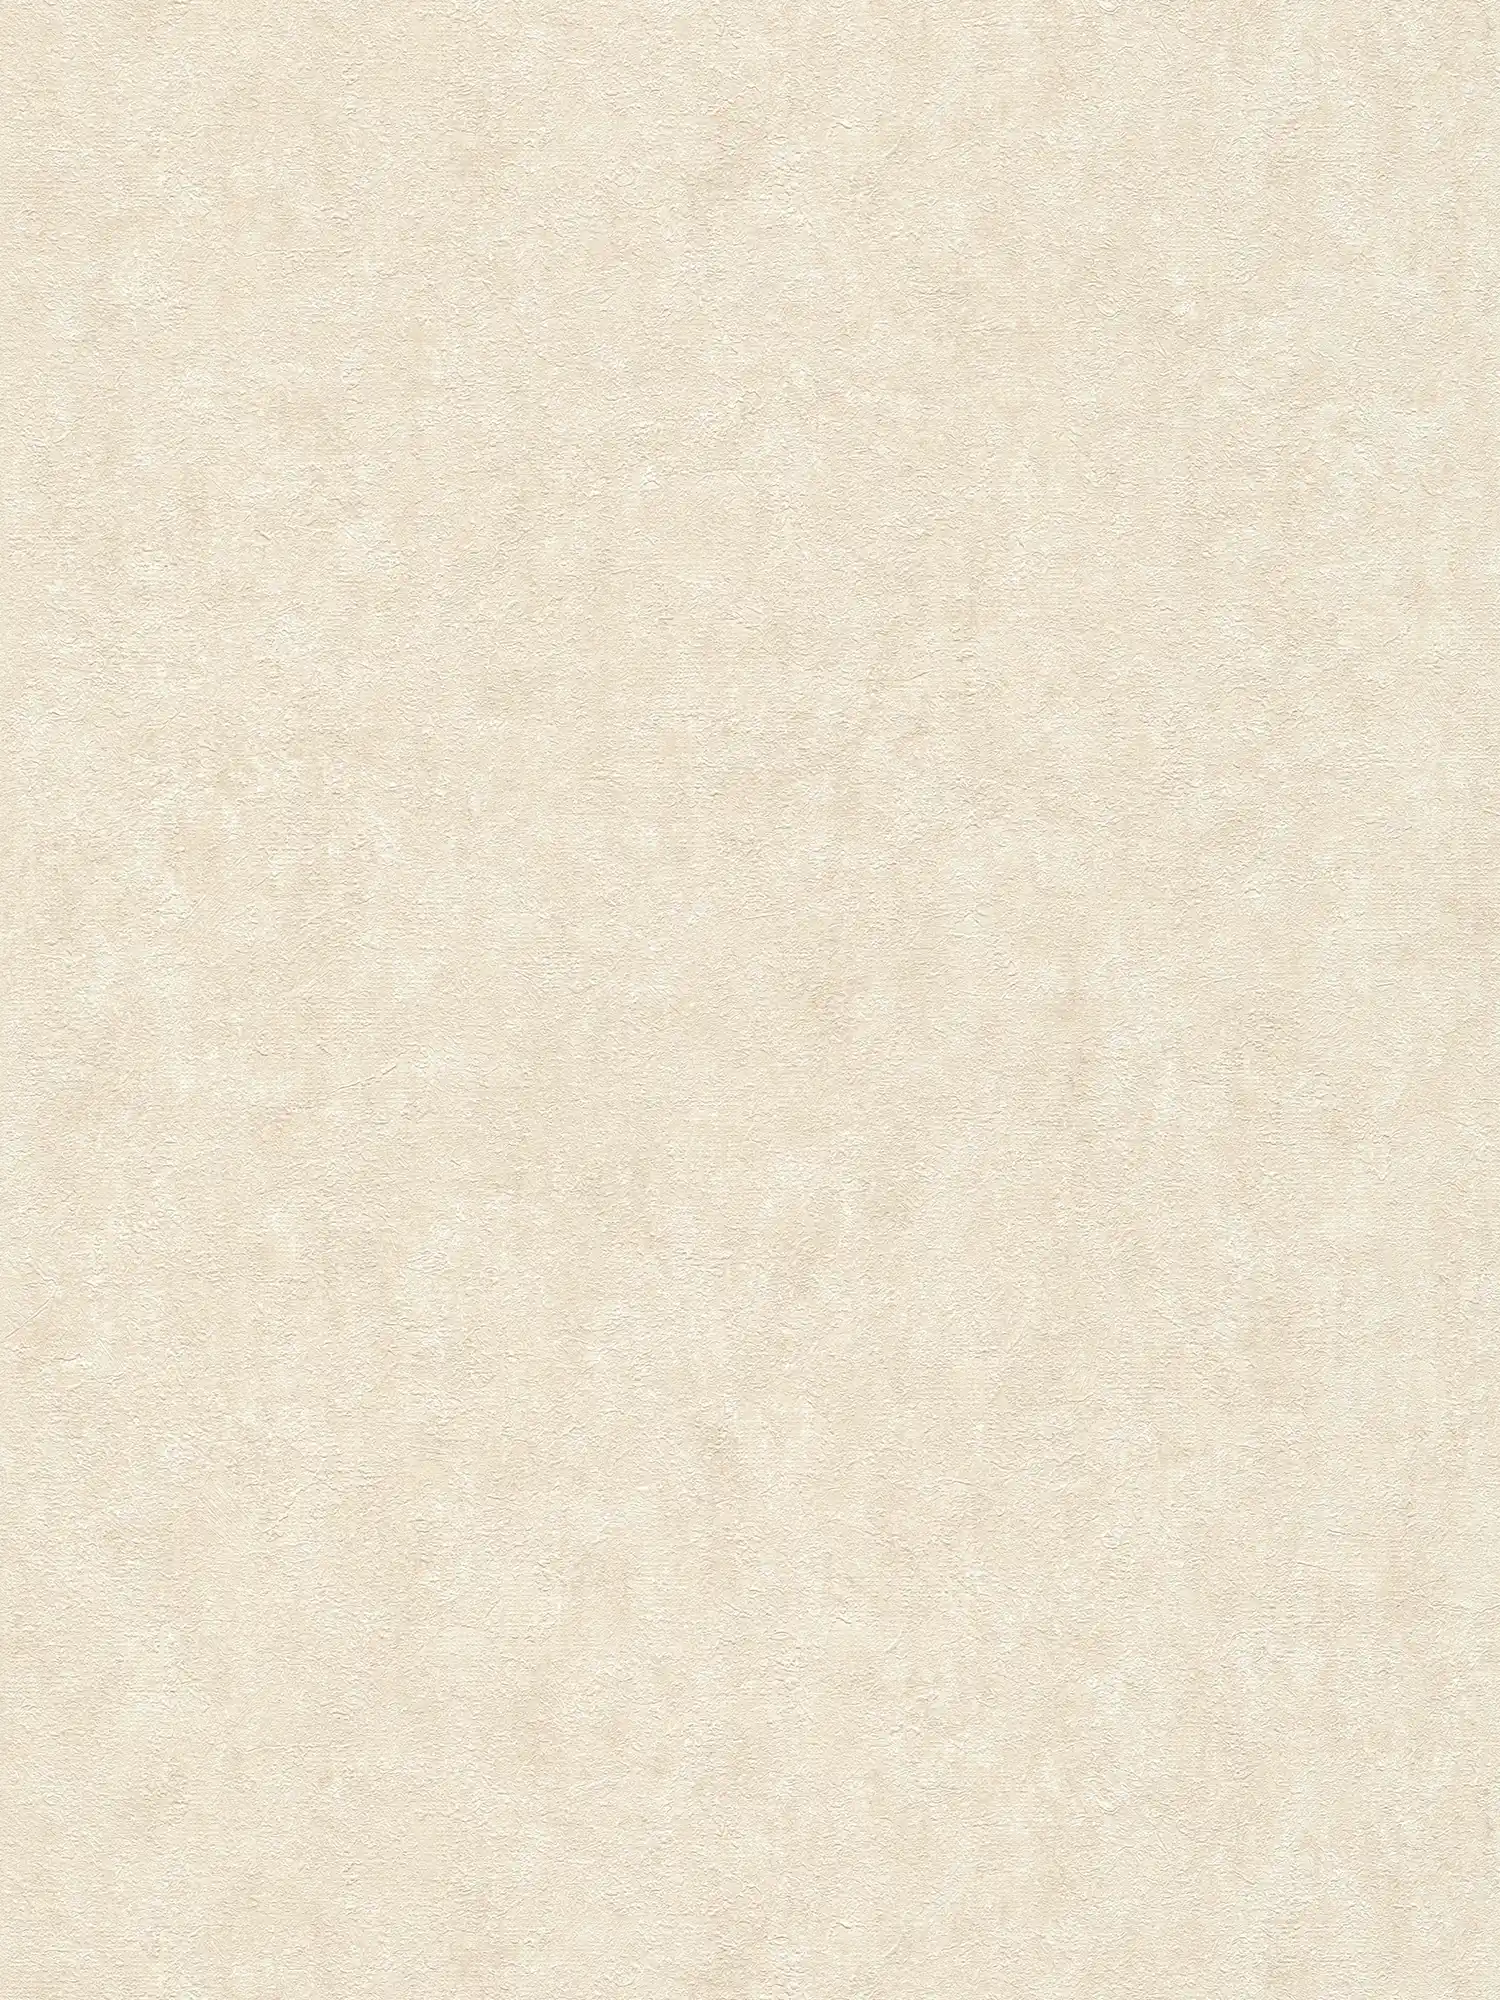 papel pintado texturizado no tejido moteado marfil - blanco, gris, crema
